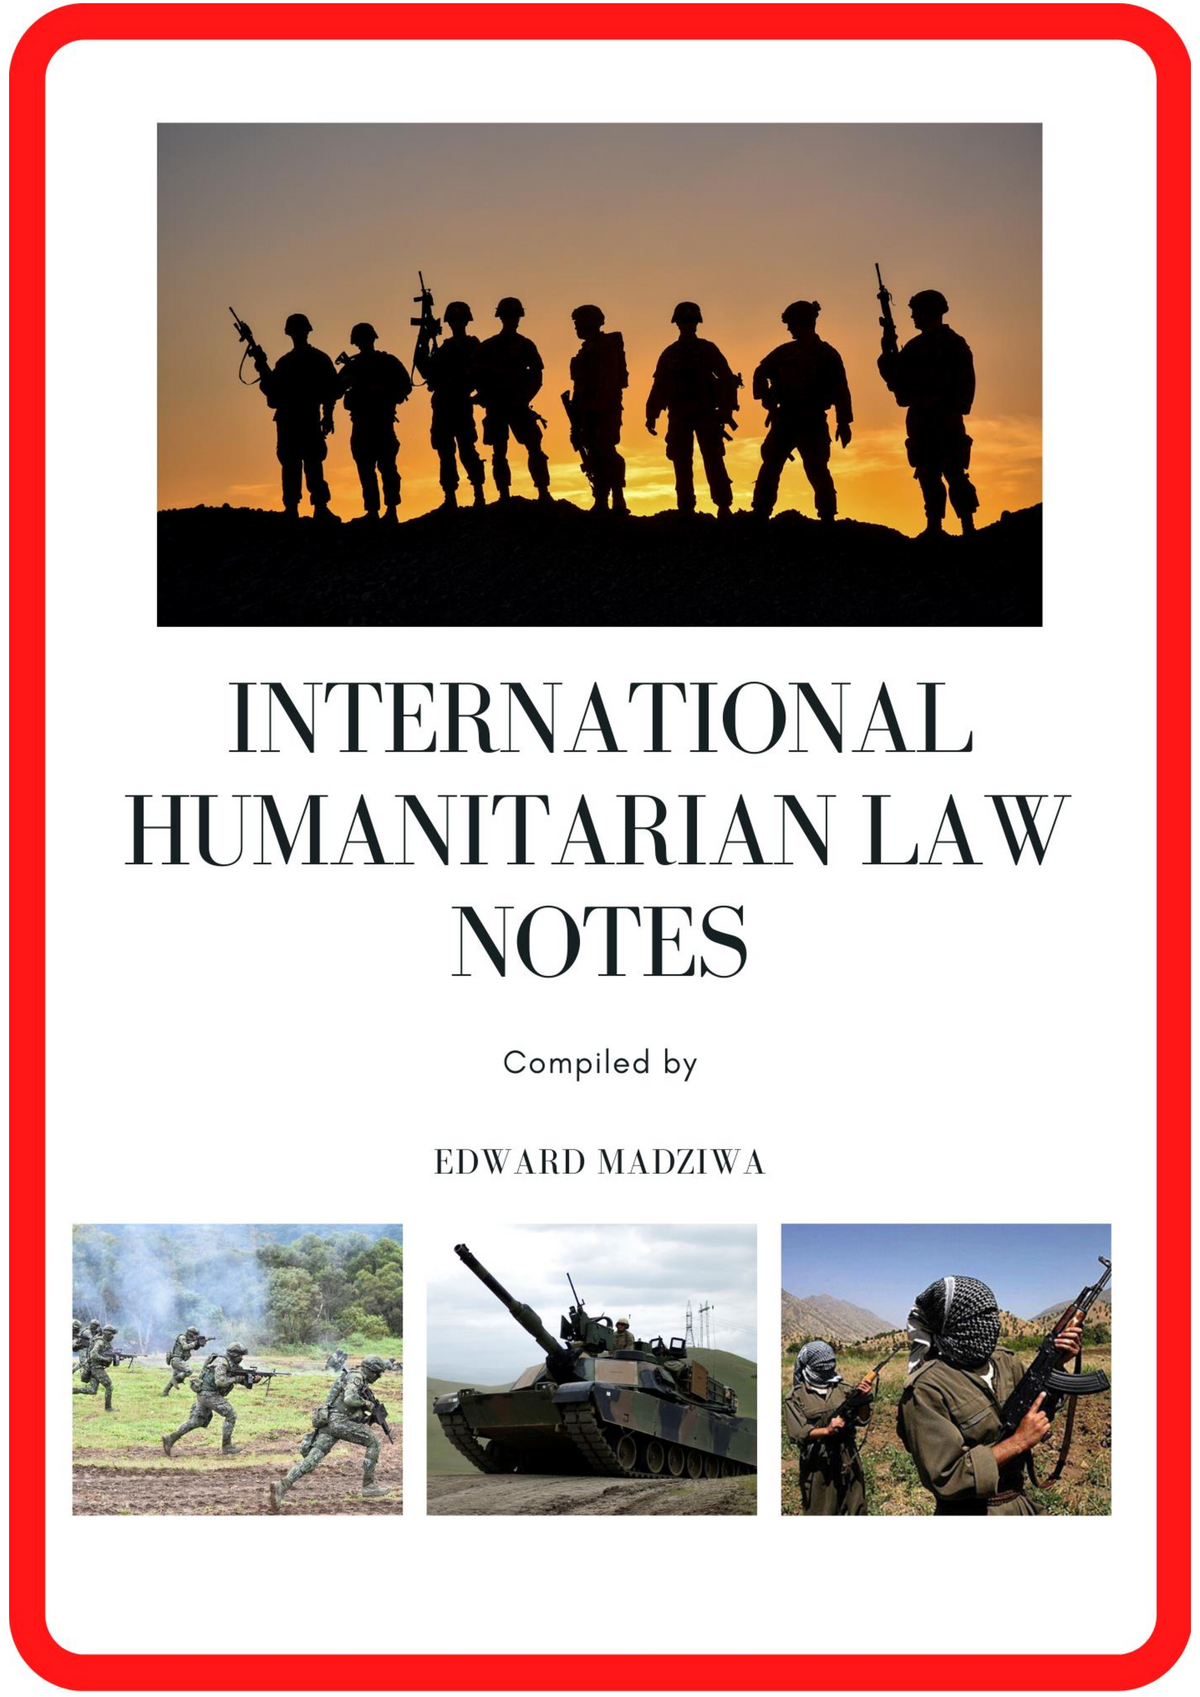 international humanitarian law research paper